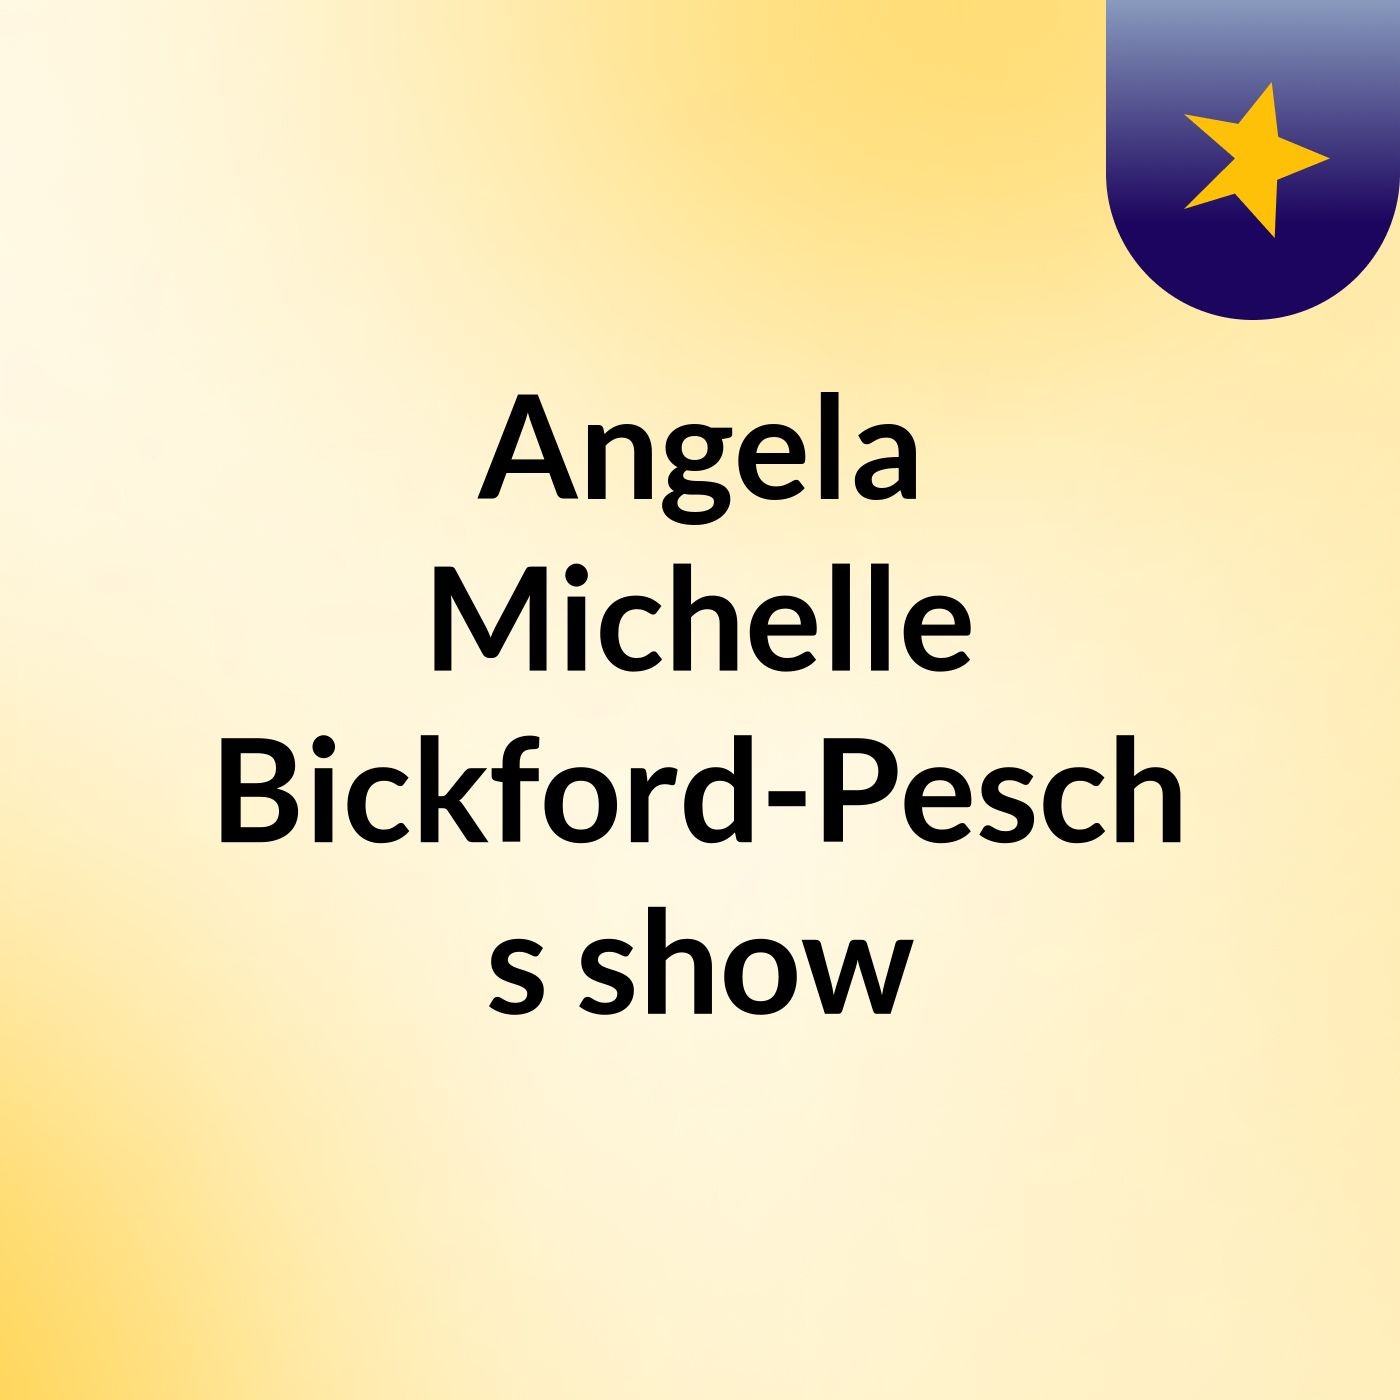 Angela Michelle Bickford-Pesch's show